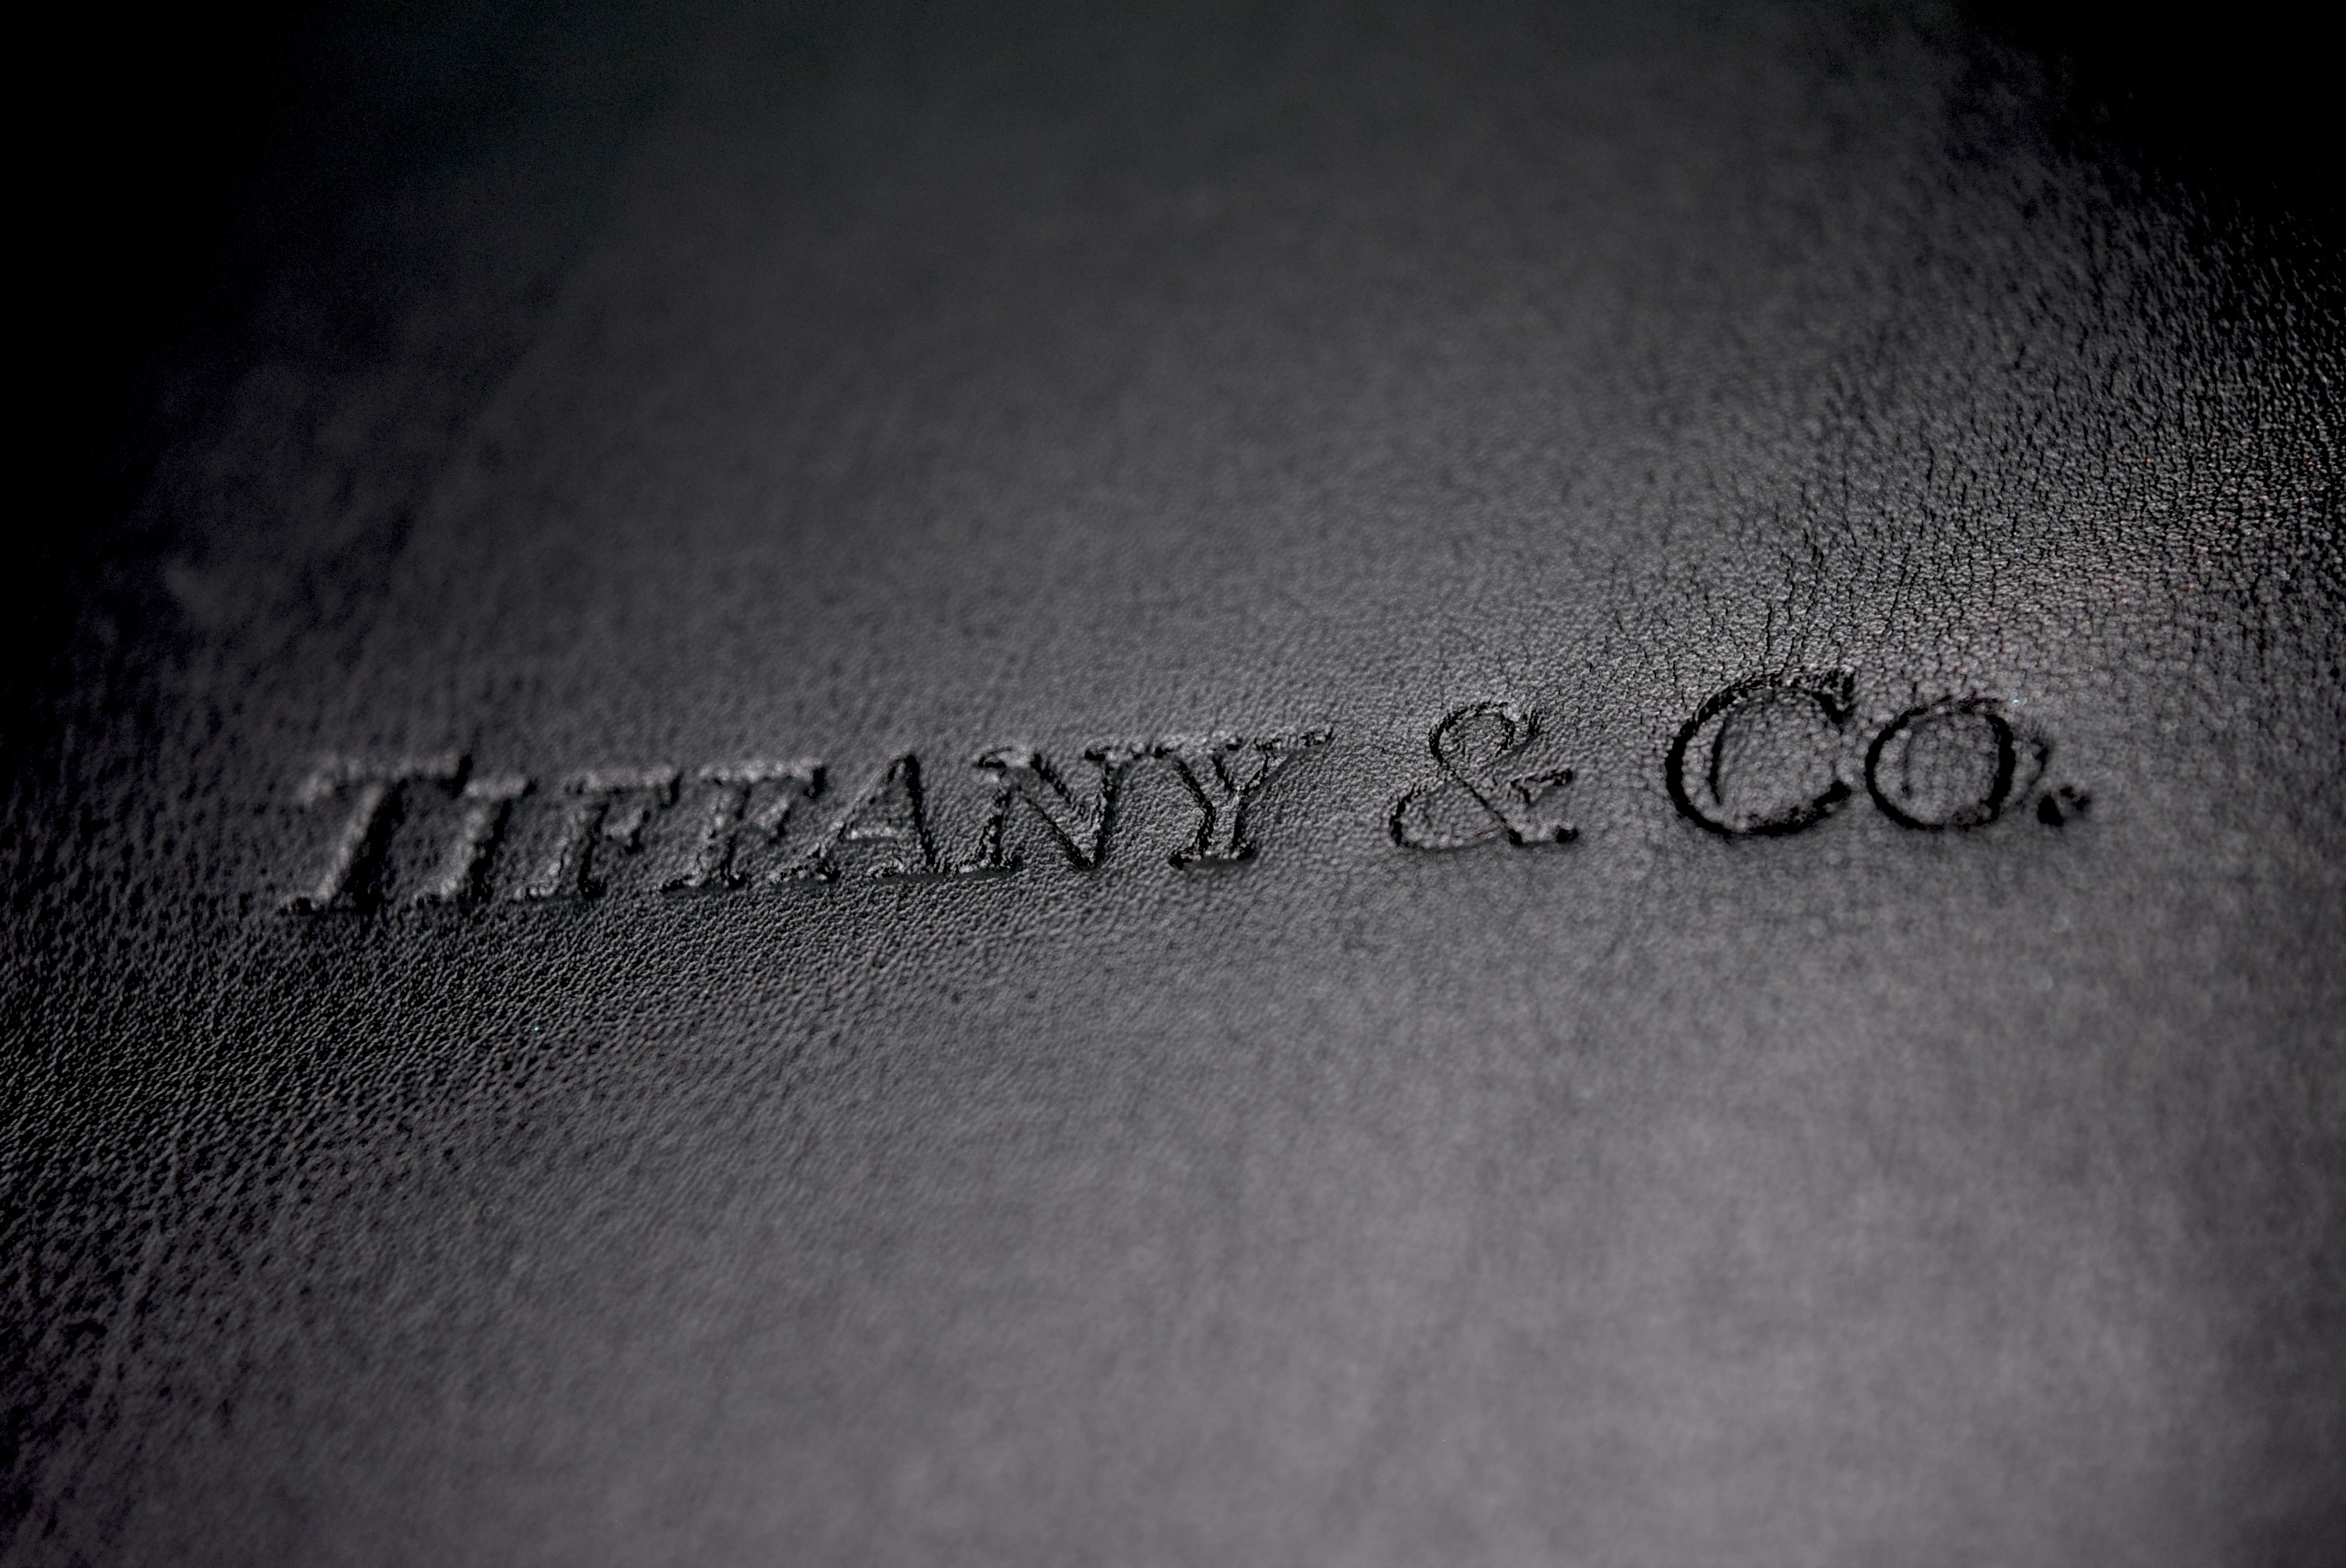 *HARRODS* TIFFANY & CO PLATINUM VVS2 DIAMOND SOLITAIRE RING "THE TIFFANY SETTING®" - BOX & CERT - Image 15 of 17